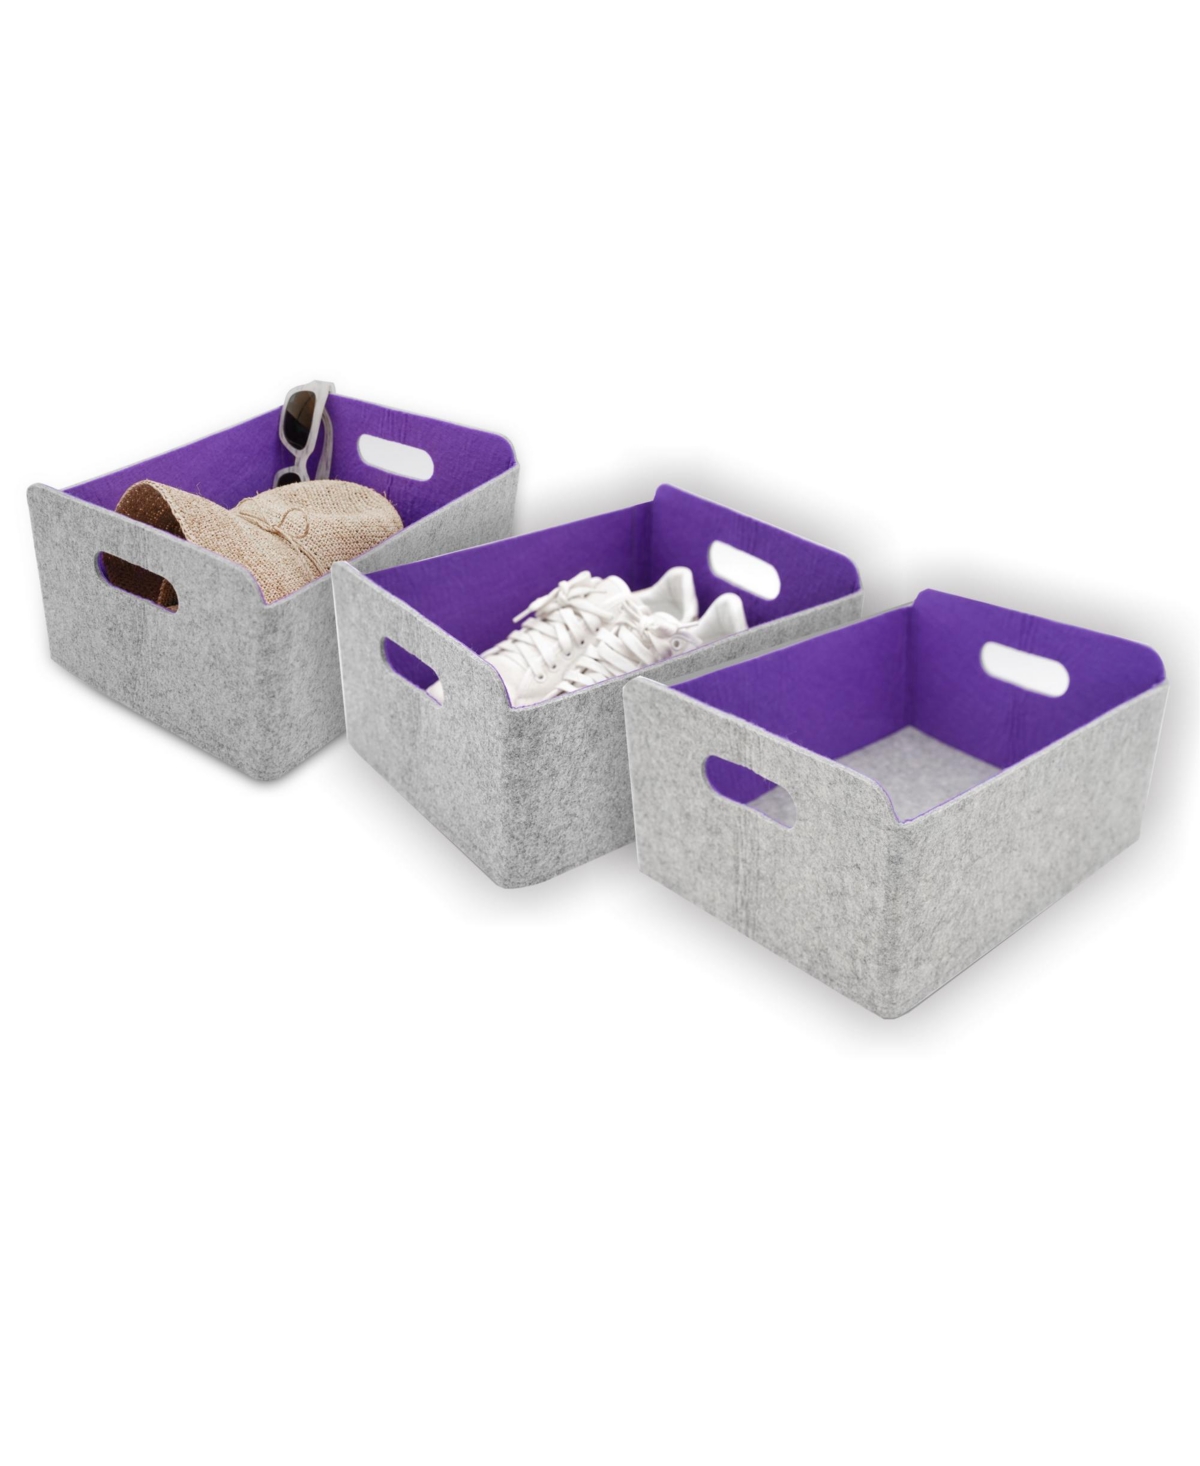 Welaxy Felt 3 Piece Collapsible Storage Bin Set In Purple